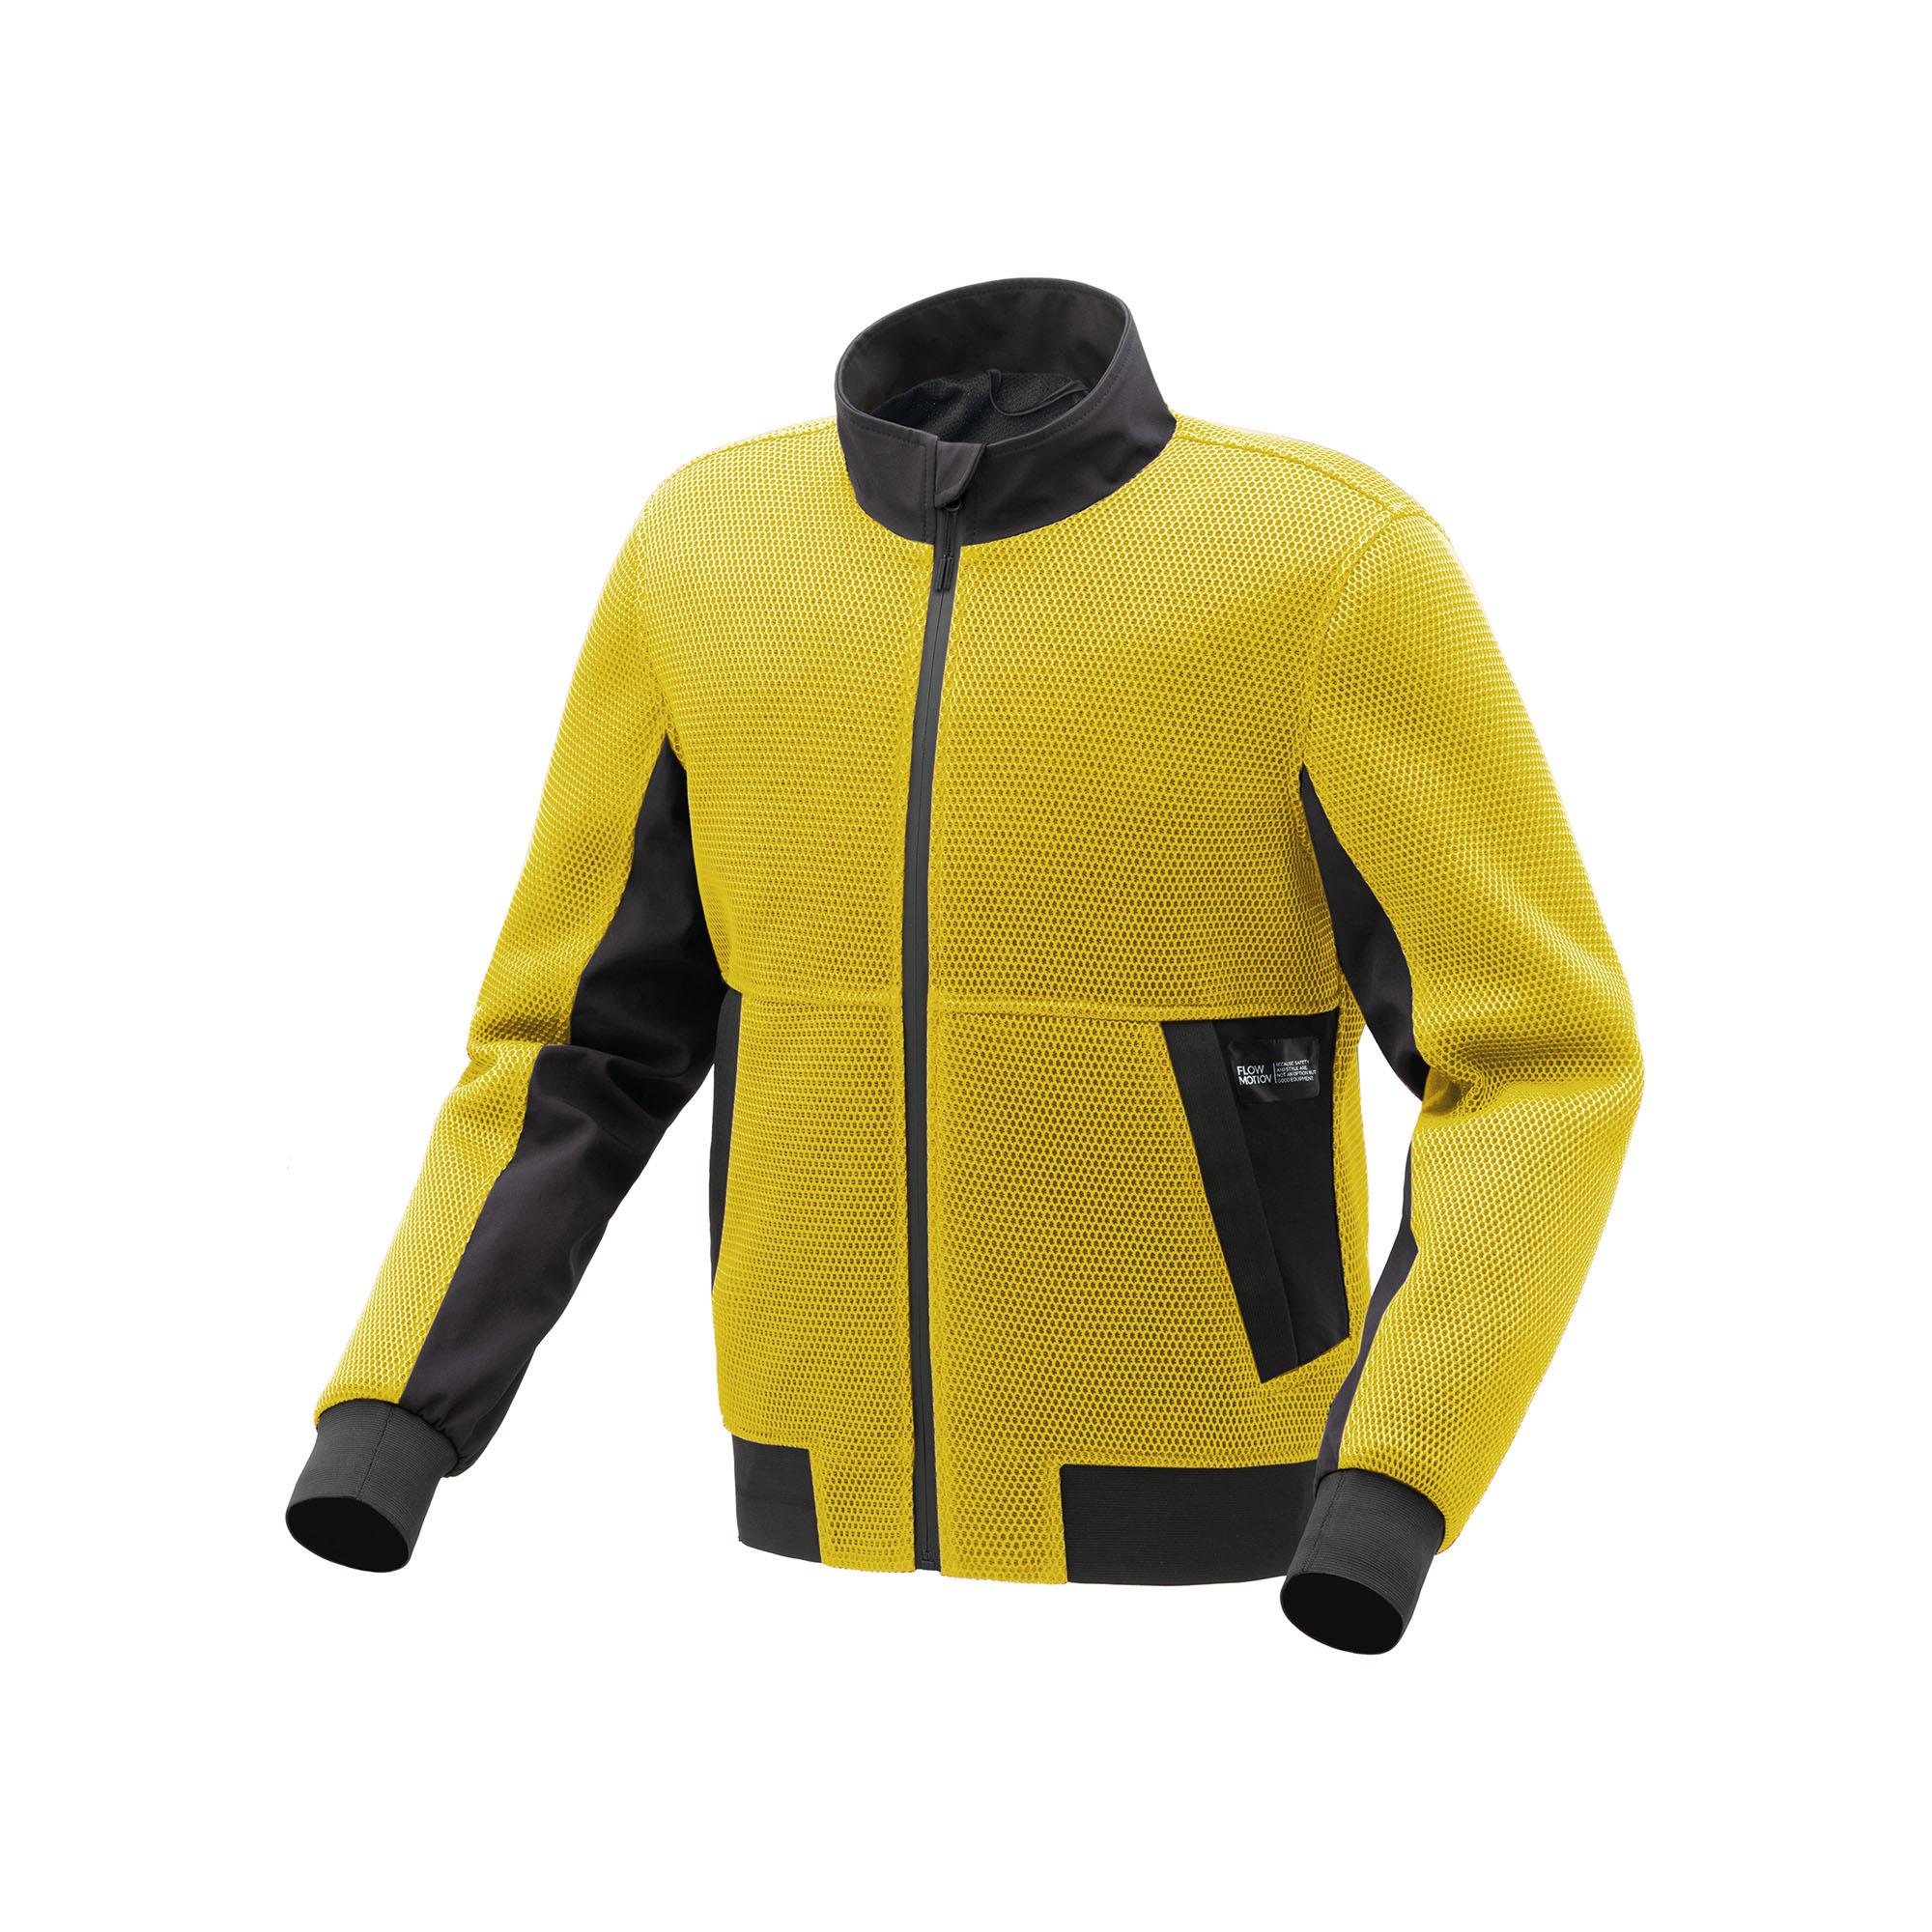 Flowmotion Jacket Yellow 